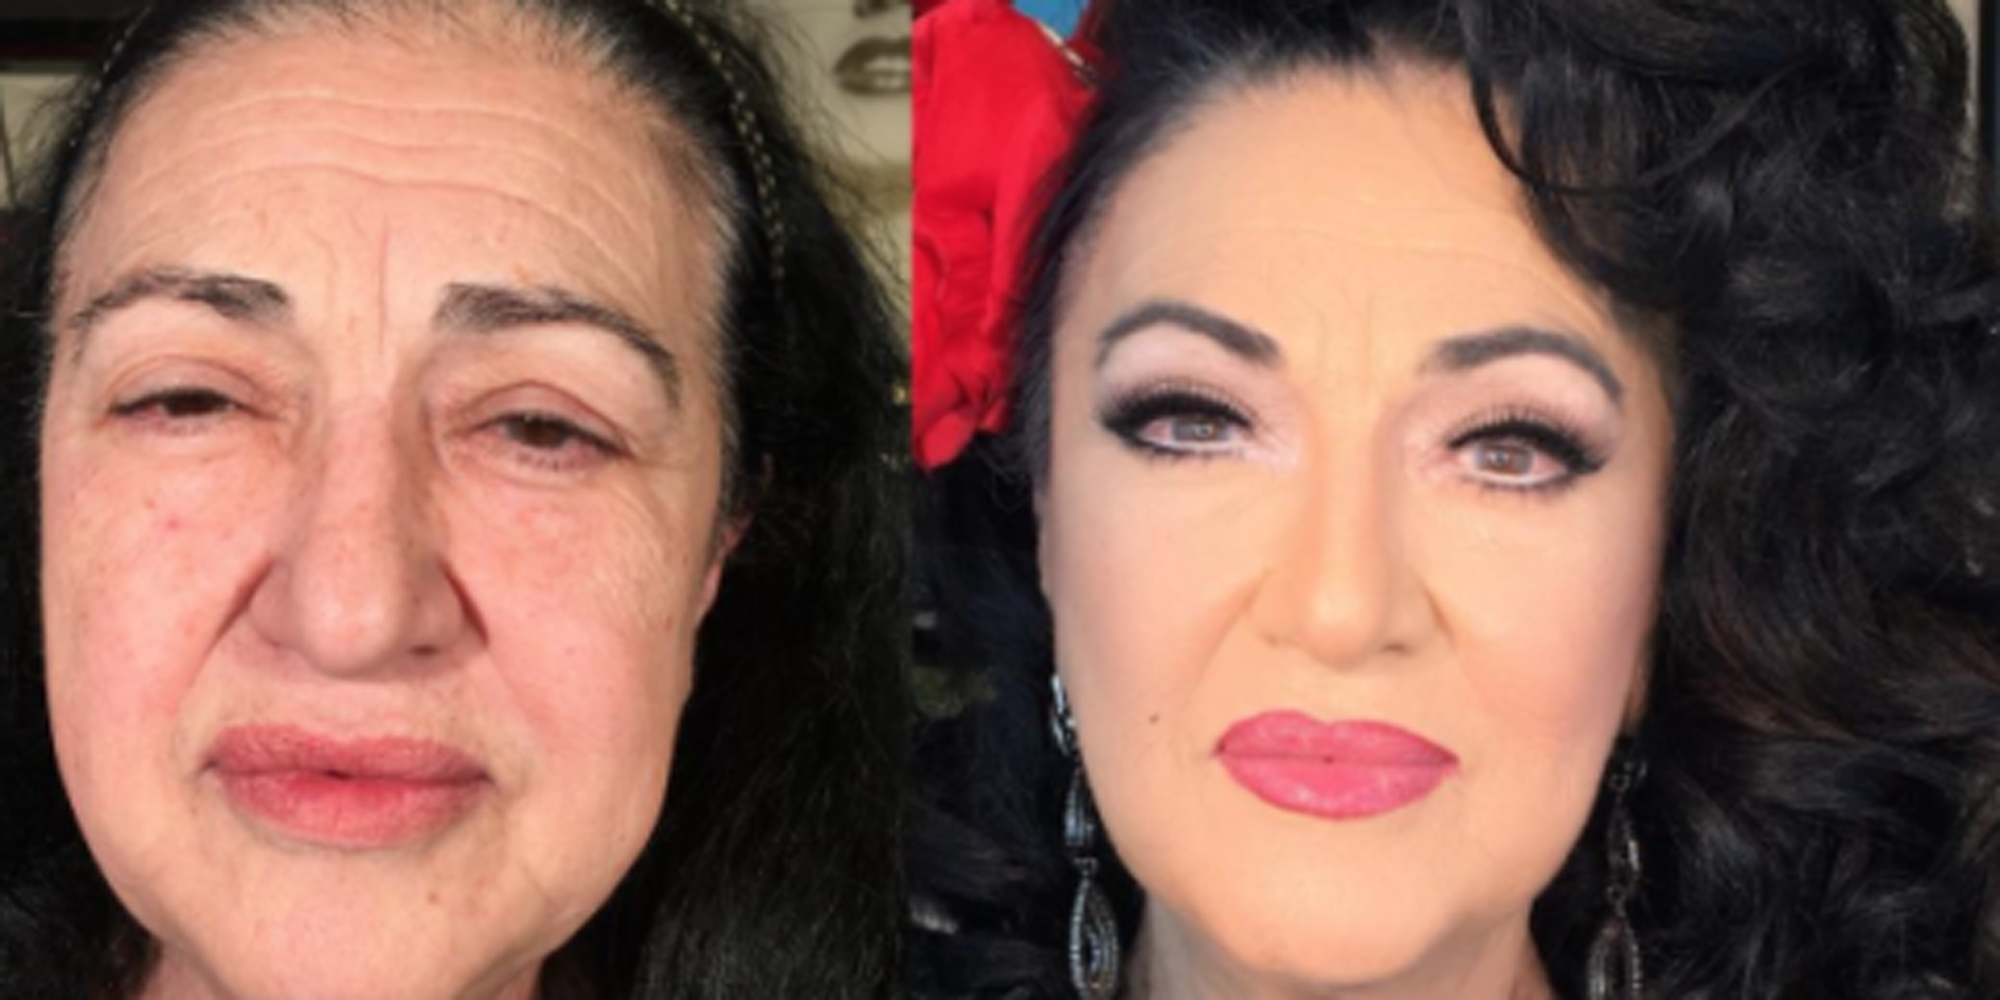 Mature women blow Photos Of Mind Blowing Makeup Transformations Of Older Women Older Women Get Incredible Hair And Makeup Transformations